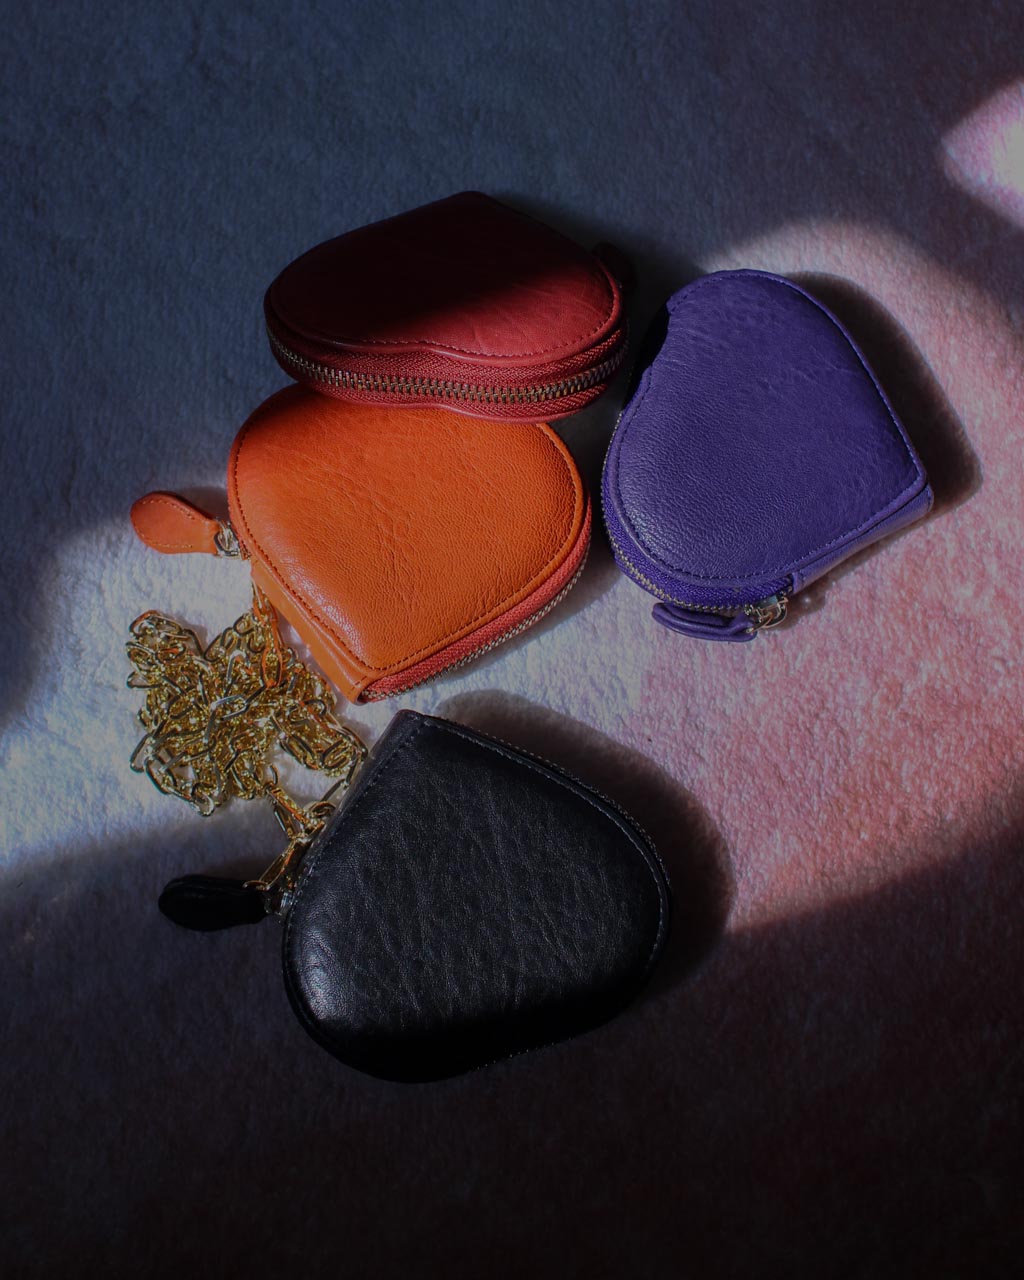 Orange Heart Cushion Purse in Italian Bubble Leather